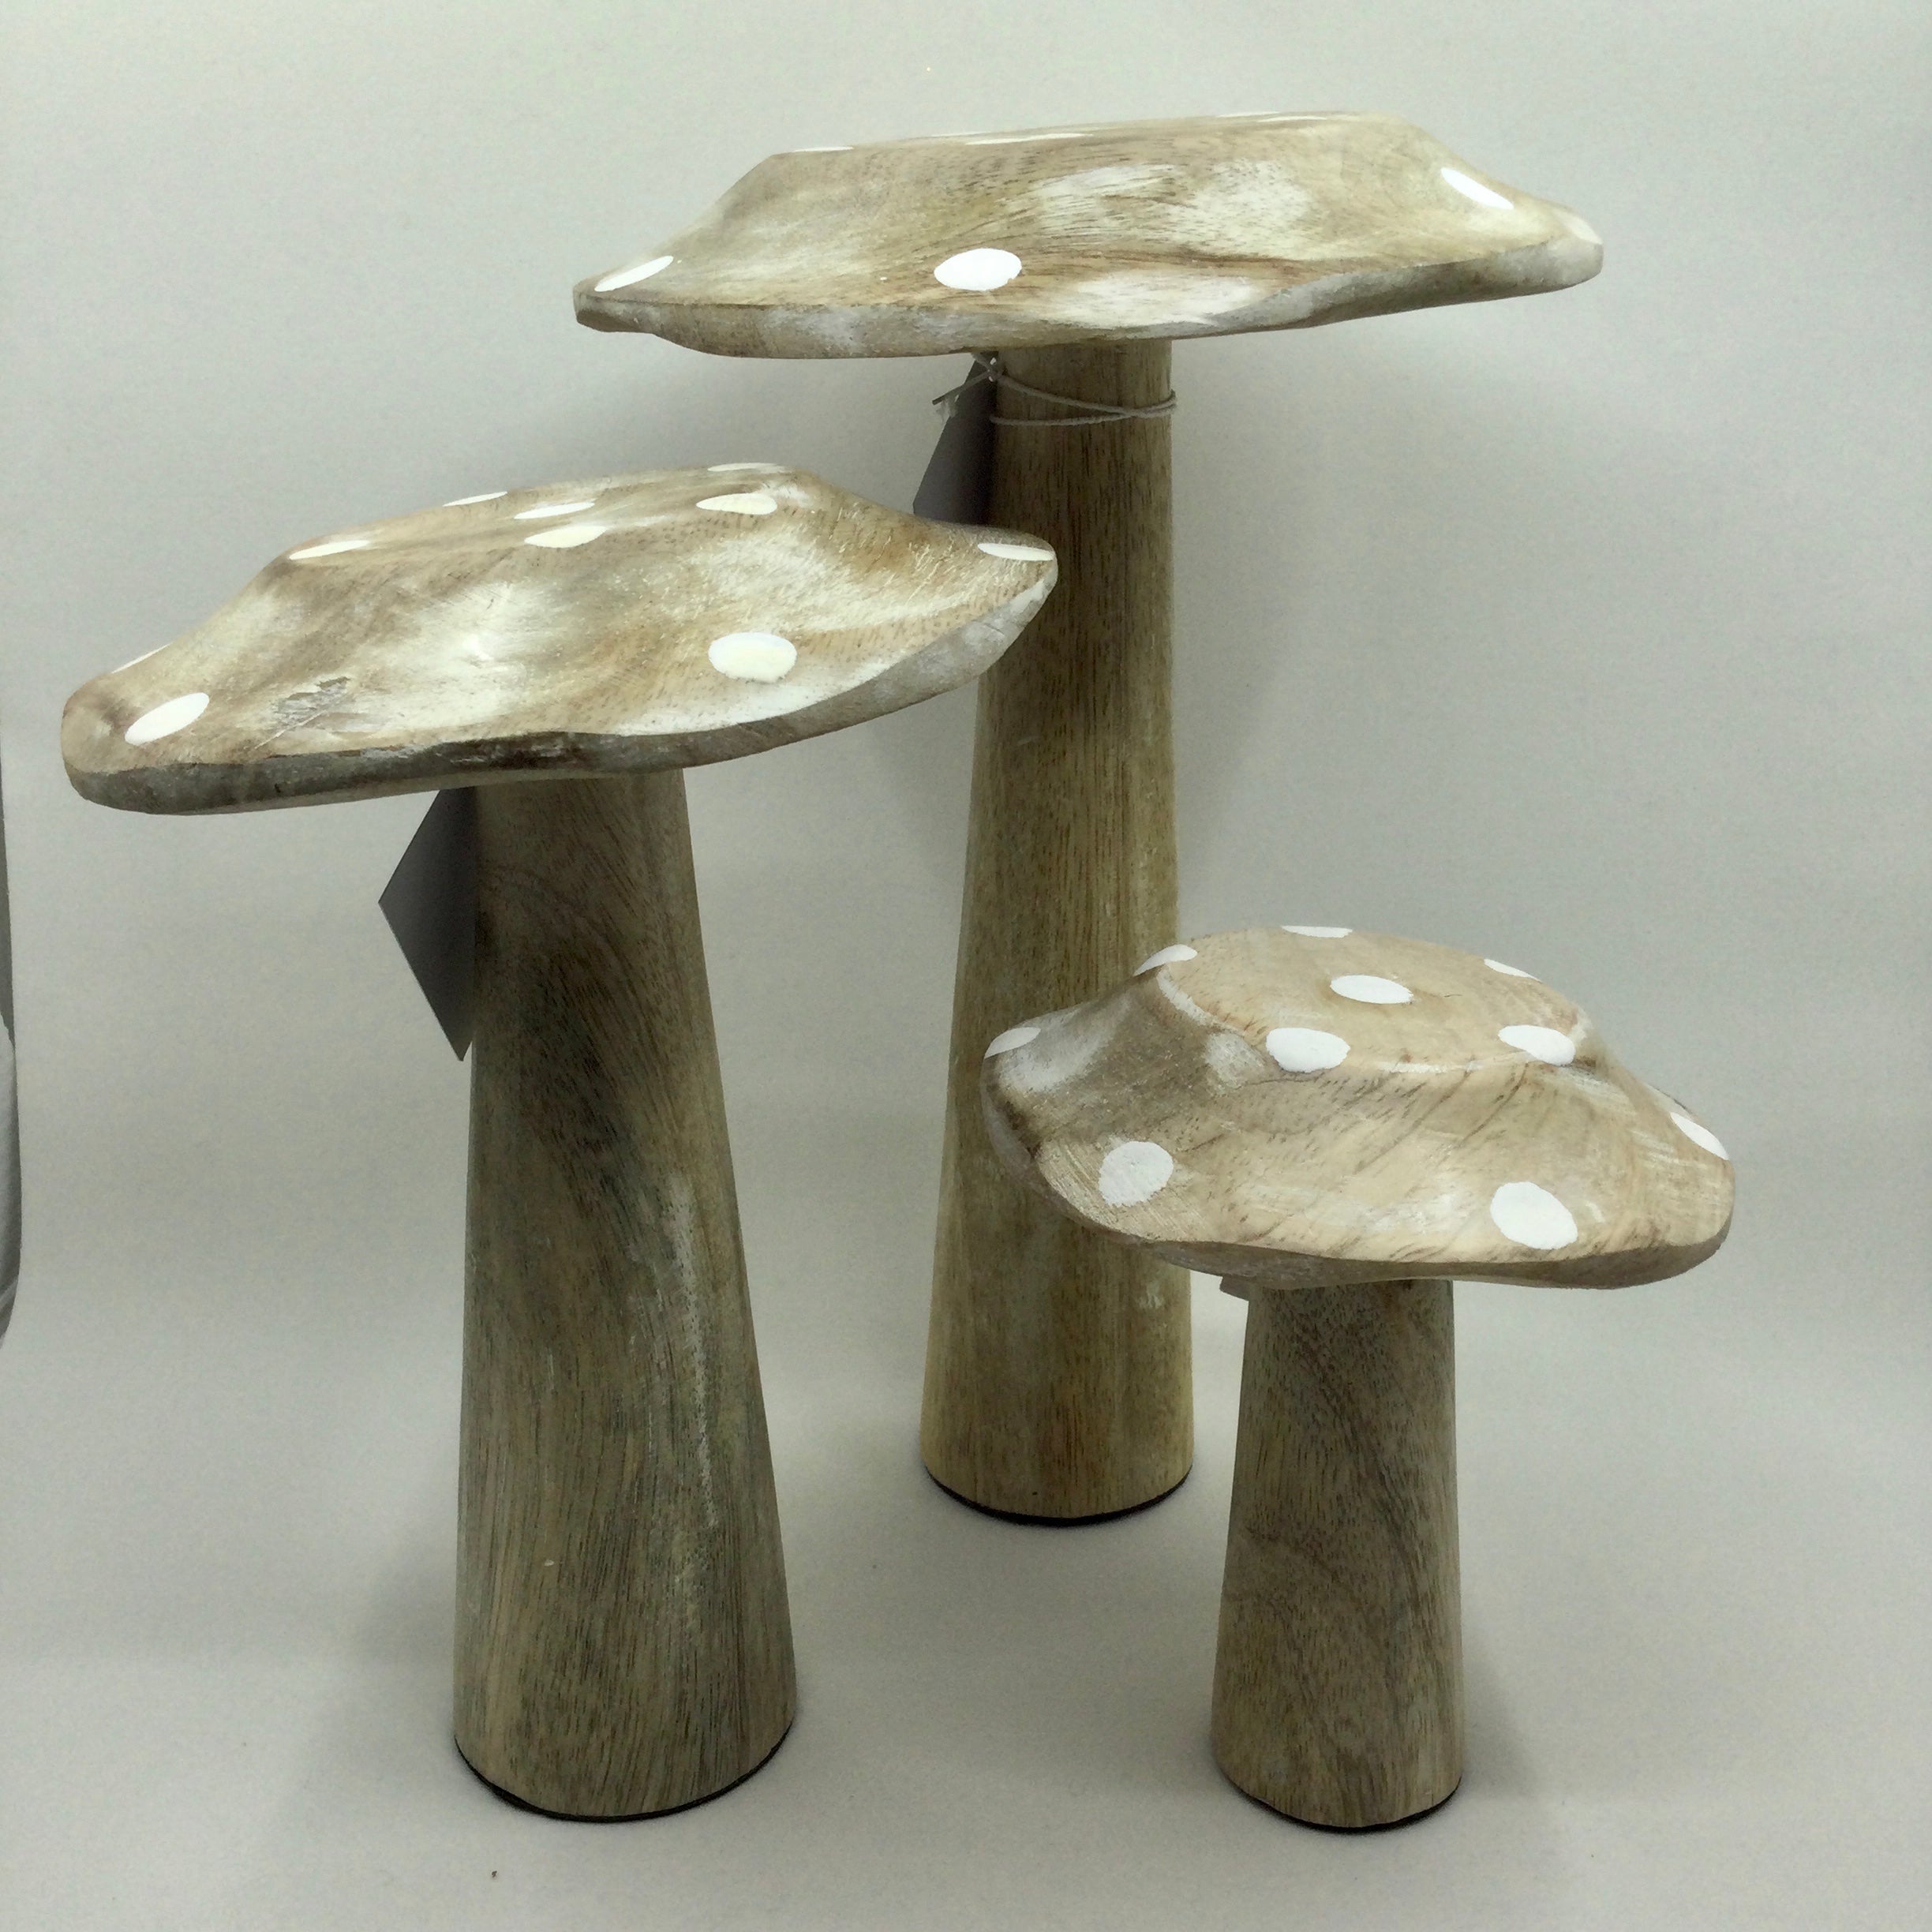 Wooden Decorative Mushroom - Large